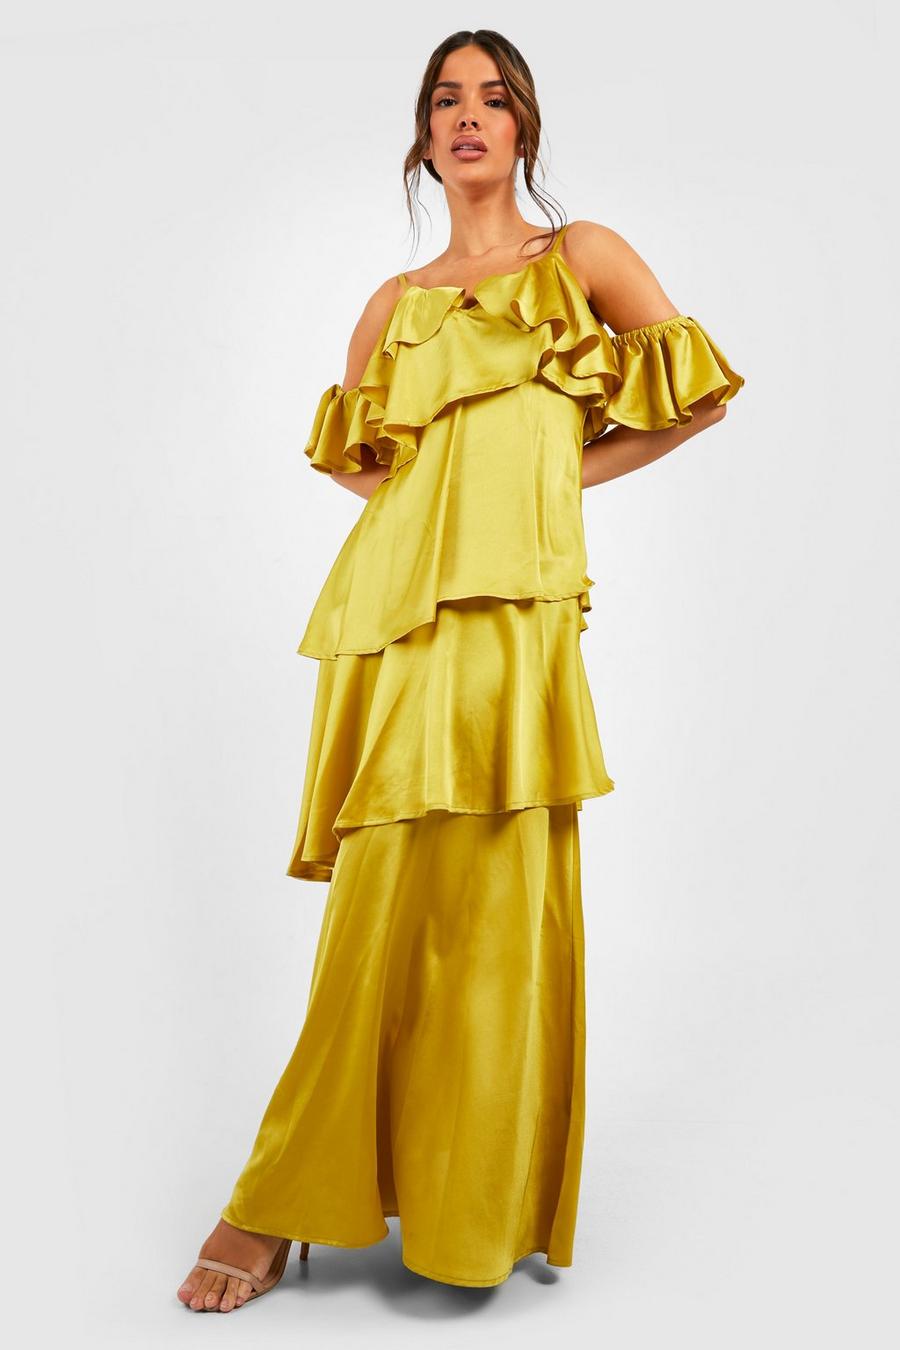 Chartreuse yellow Satin Ruffle Tiered Maxi Dress